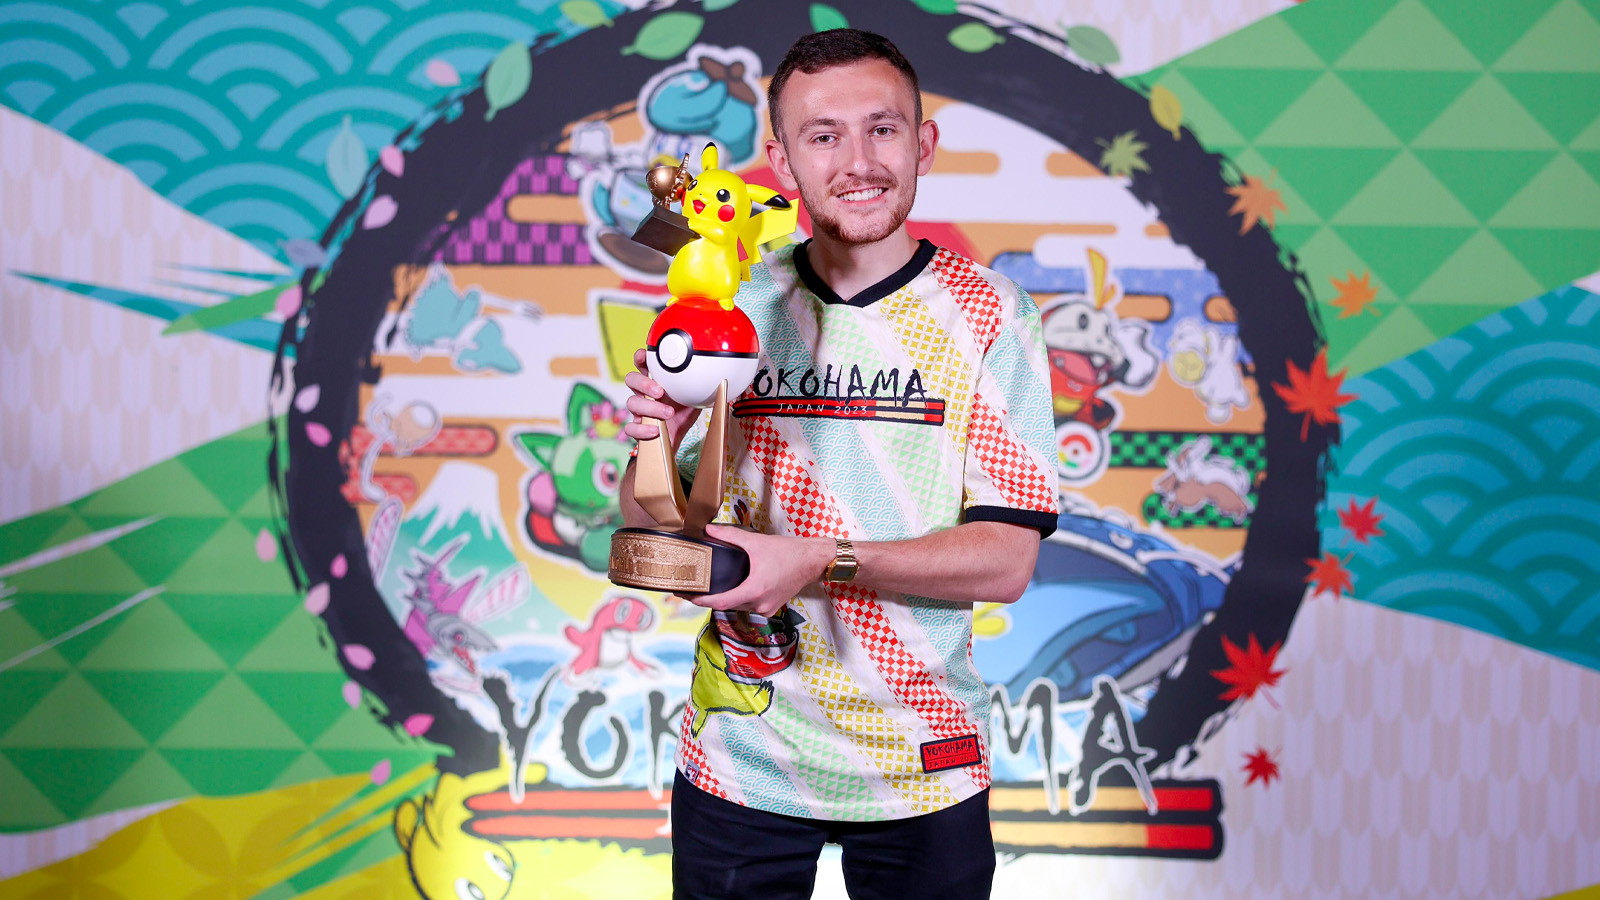 Pokémon TCG: 2023 Pokémon TCG World Championships Deck Styles May Vary  290-87603 - Best Buy